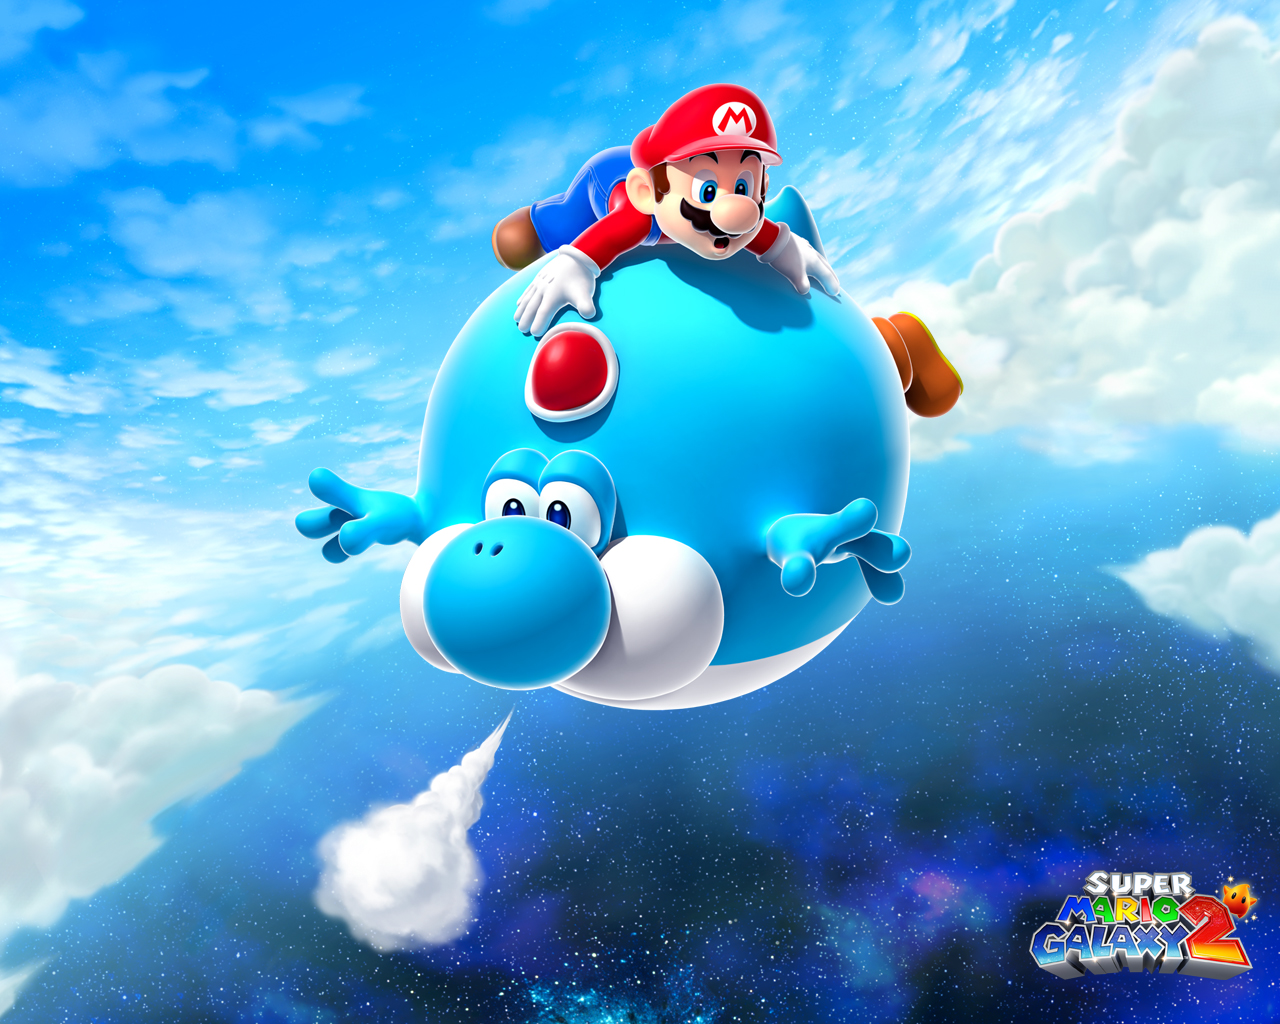 Flying Mario Super Galaxy